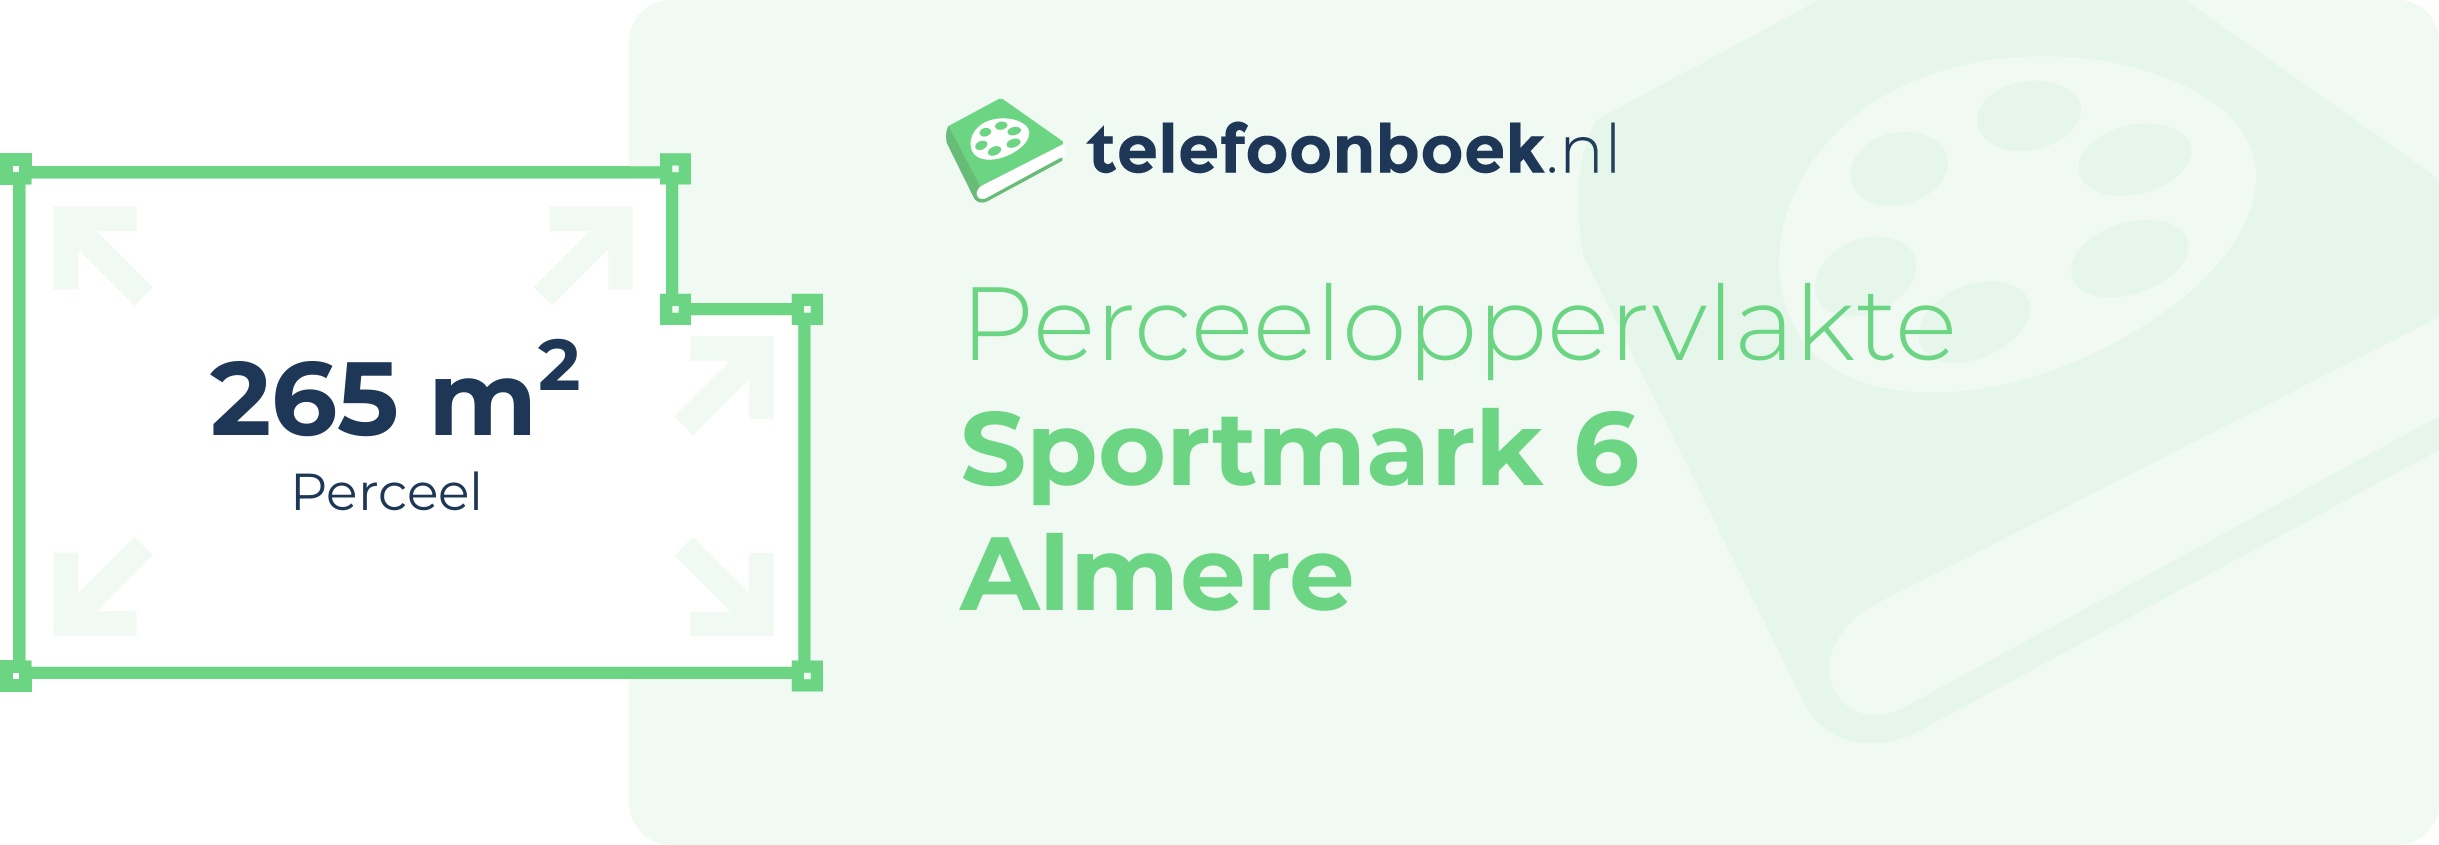 Perceeloppervlakte Sportmark 6 Almere